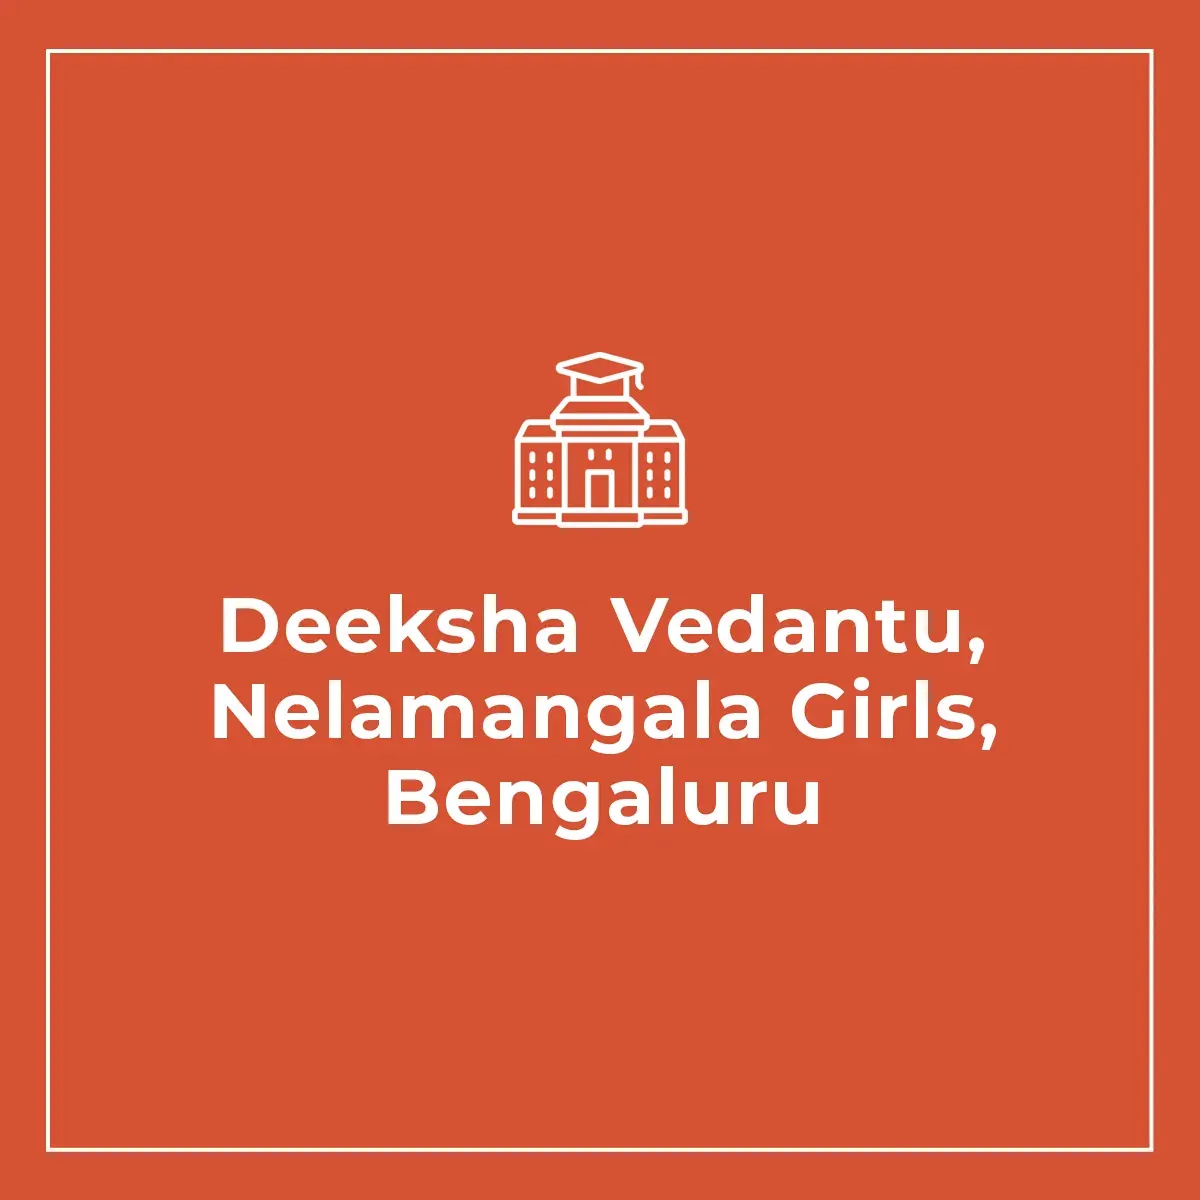 Deeksha Vedantu, Nelamangala Girls, Bengaluru